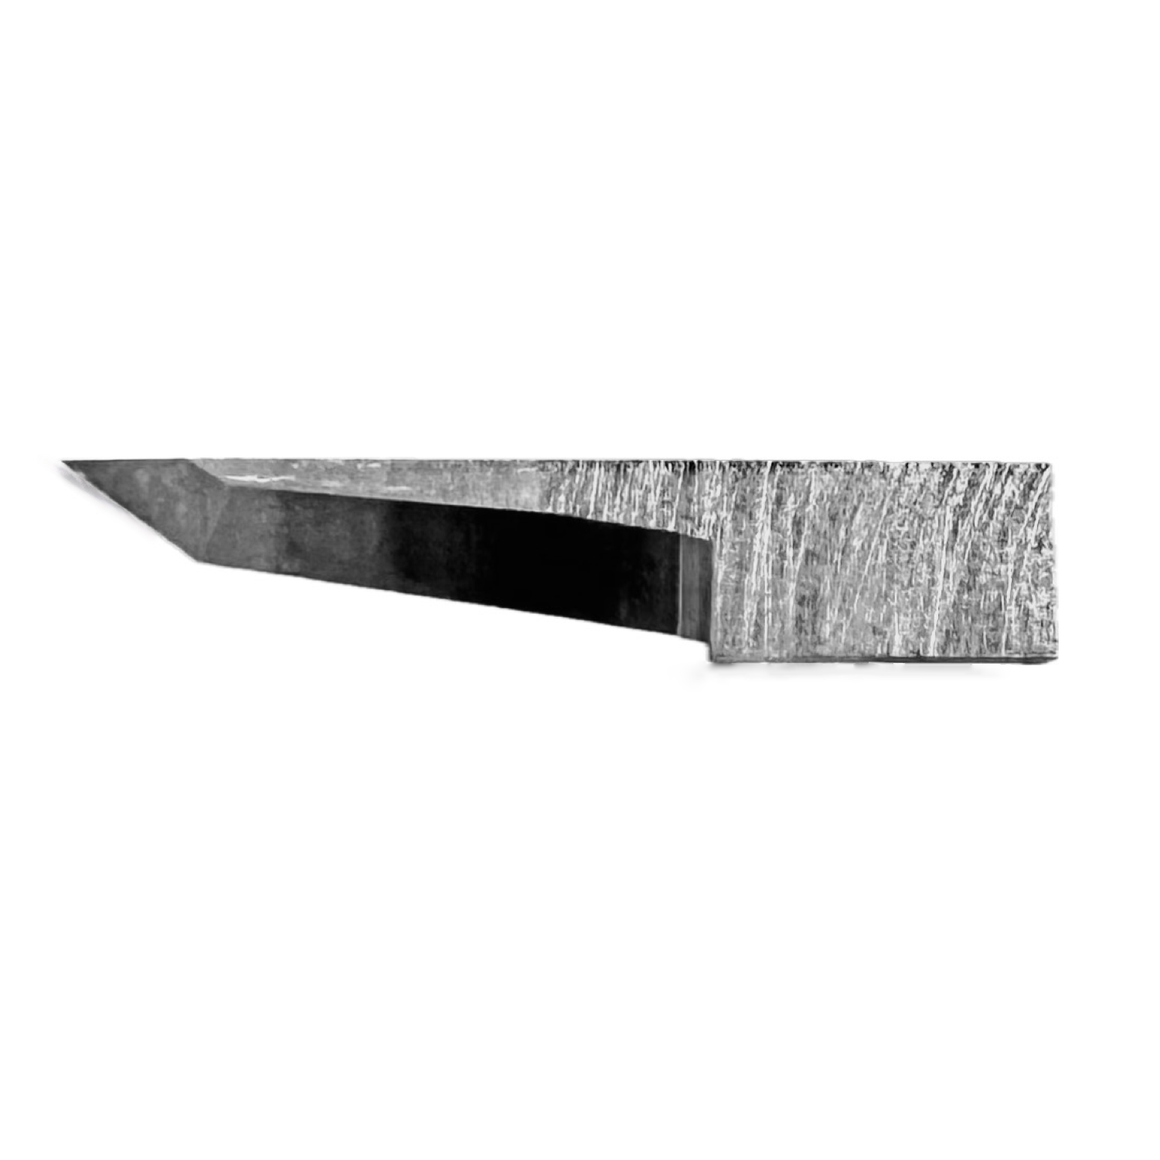 BLD-Z60 carbide oscillating pointed knife blade